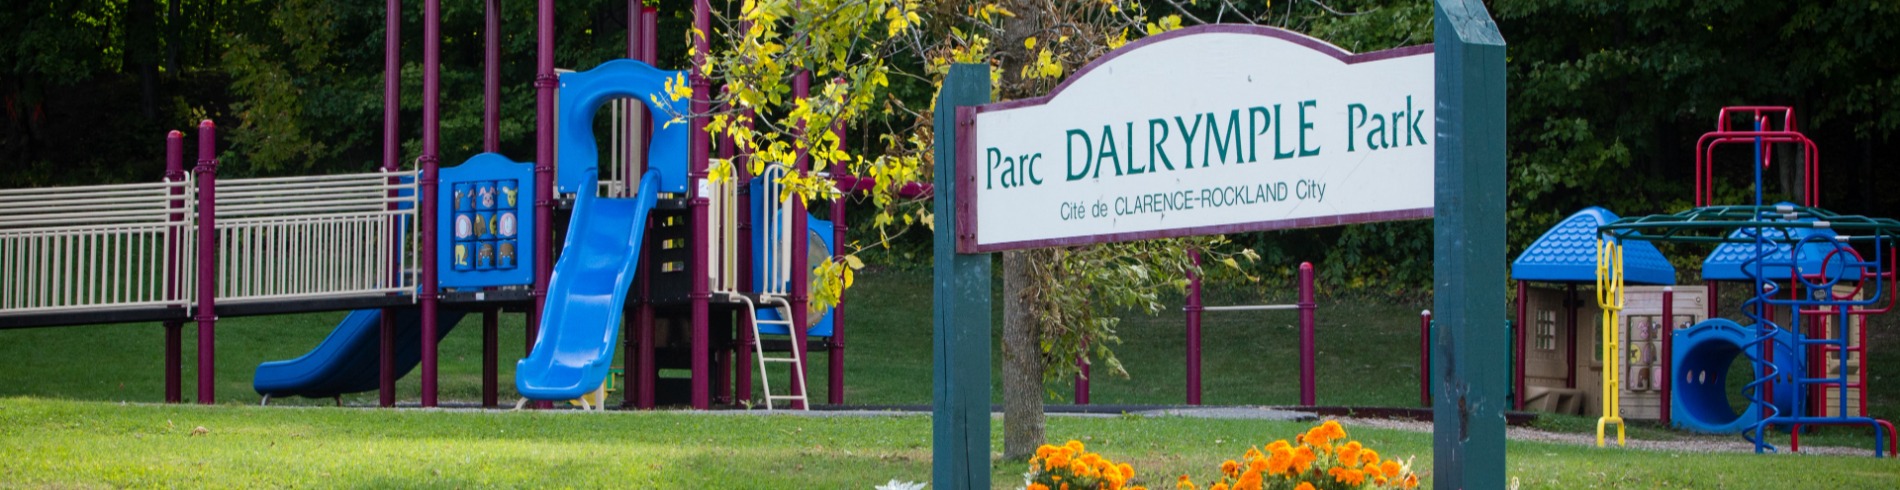 Parc Dalrymple